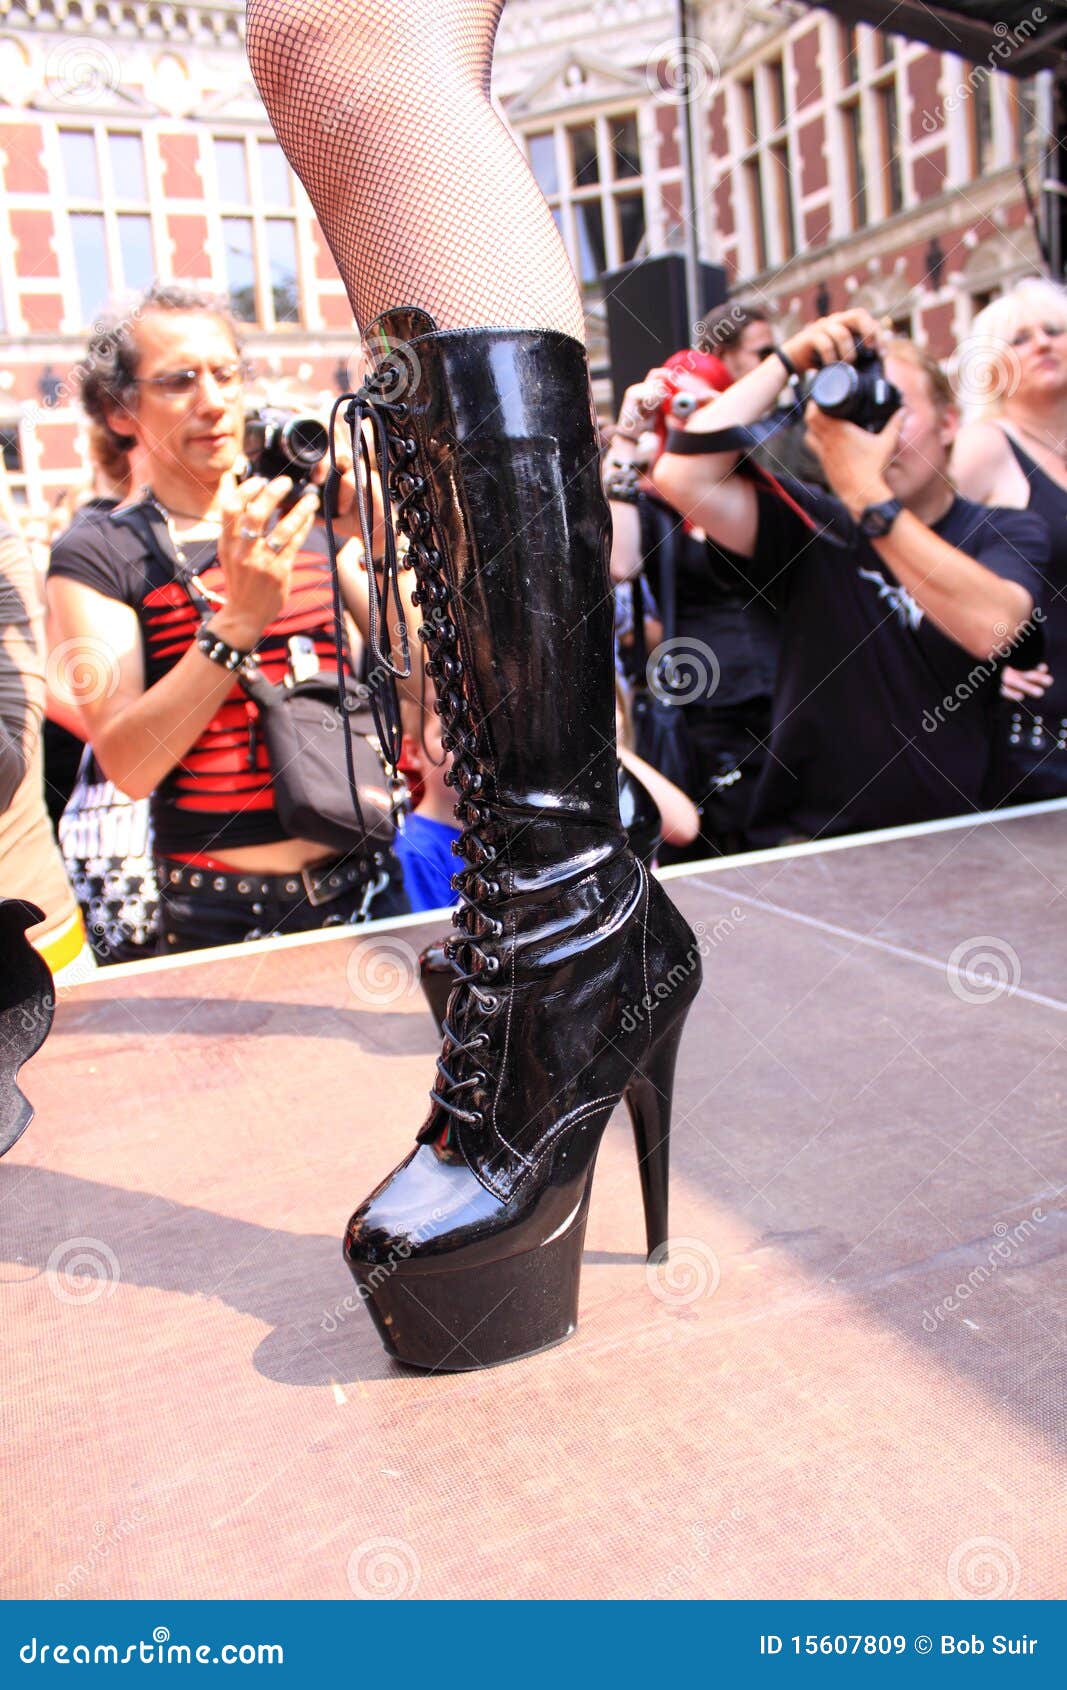 Deichmann Catwalk Women's Black Boots, Size 6, EUR 39 | eBay